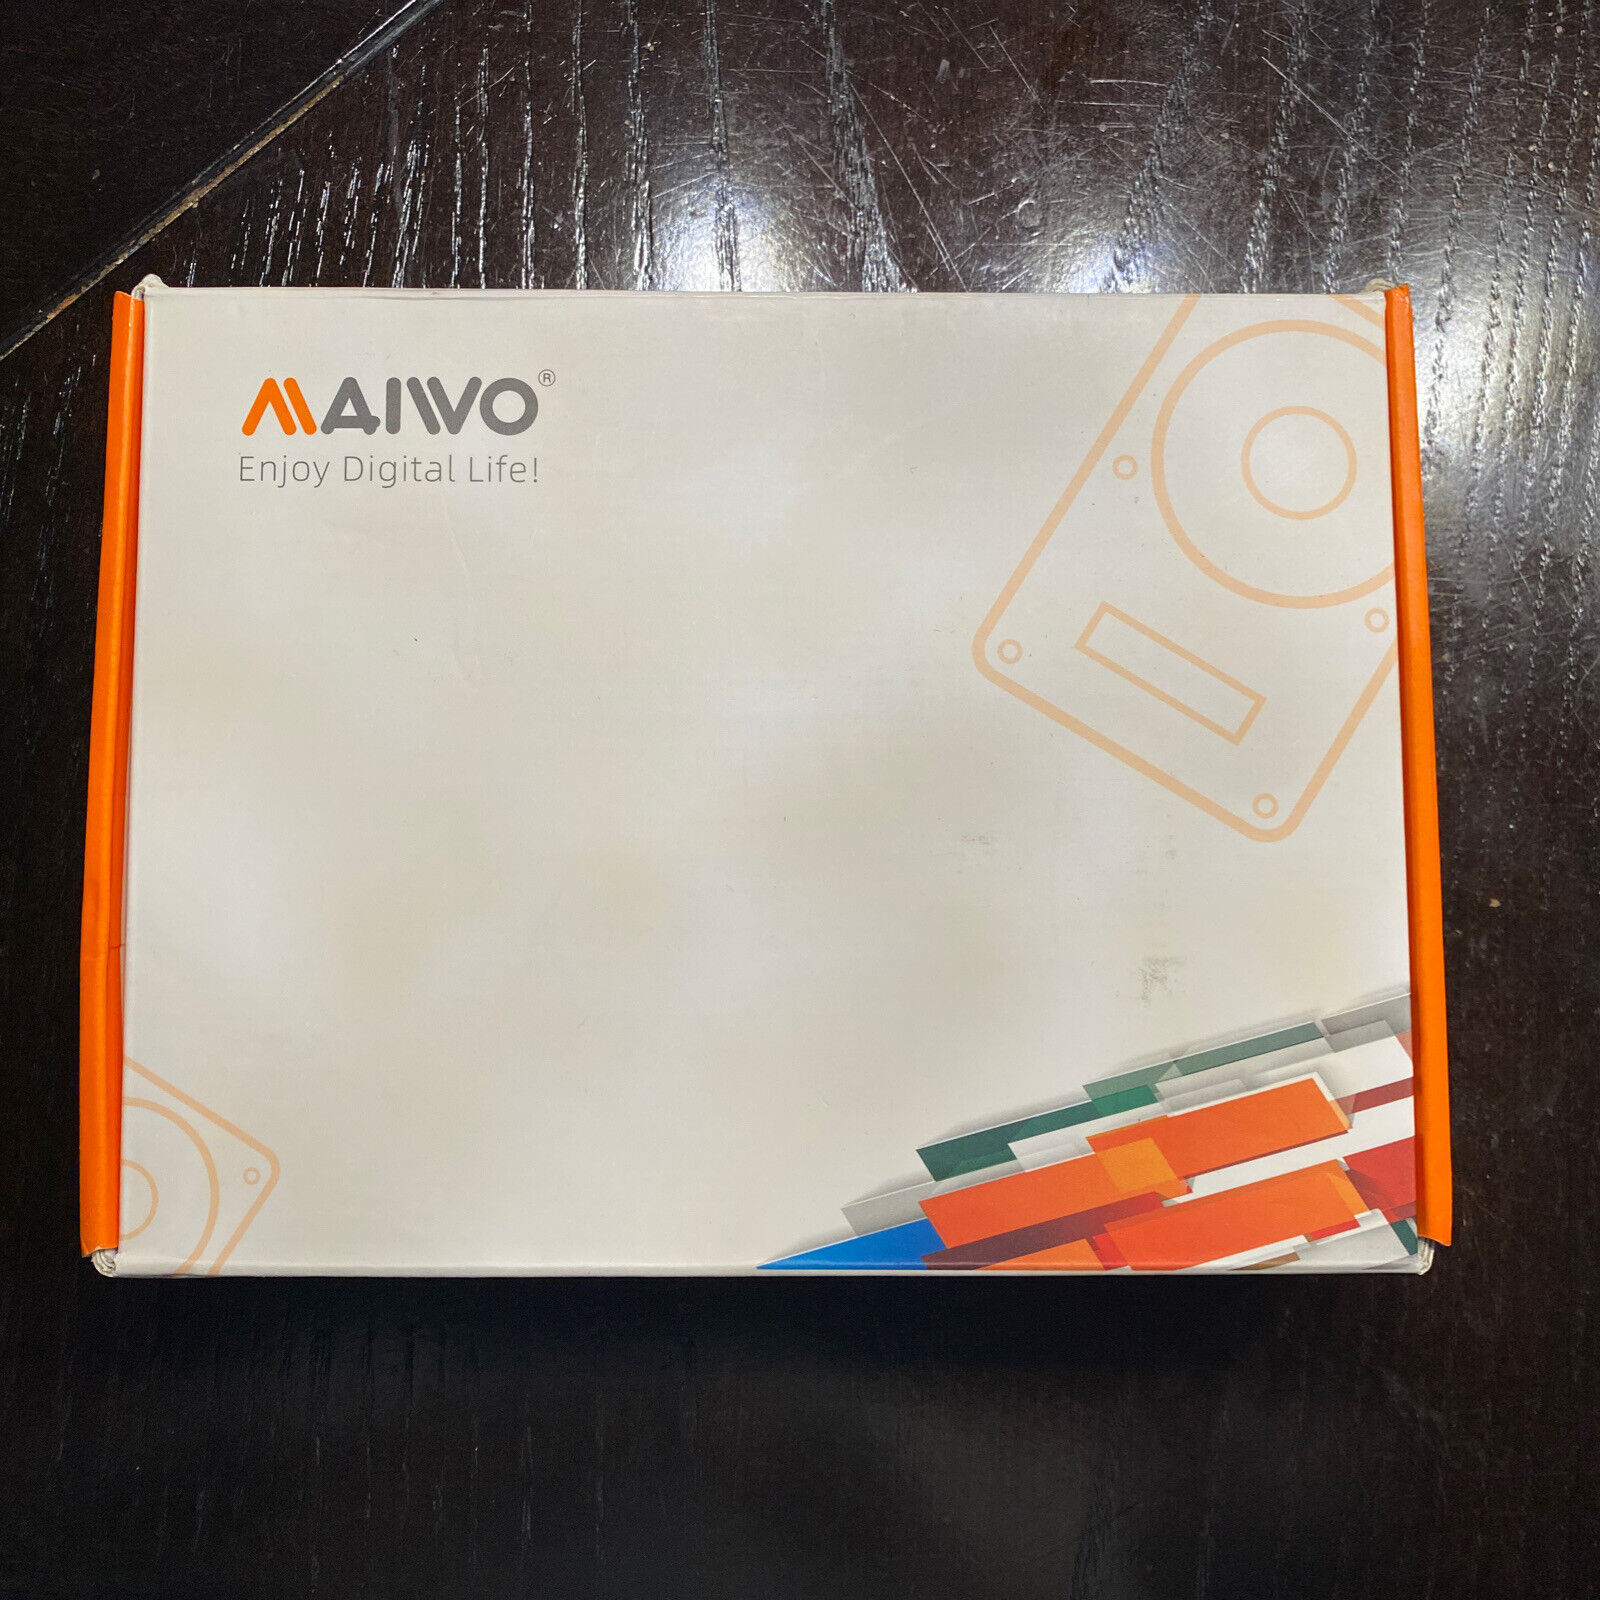 MAIWO M.2 SATA and NVMe Combo SSD Enclosure with Aluminum